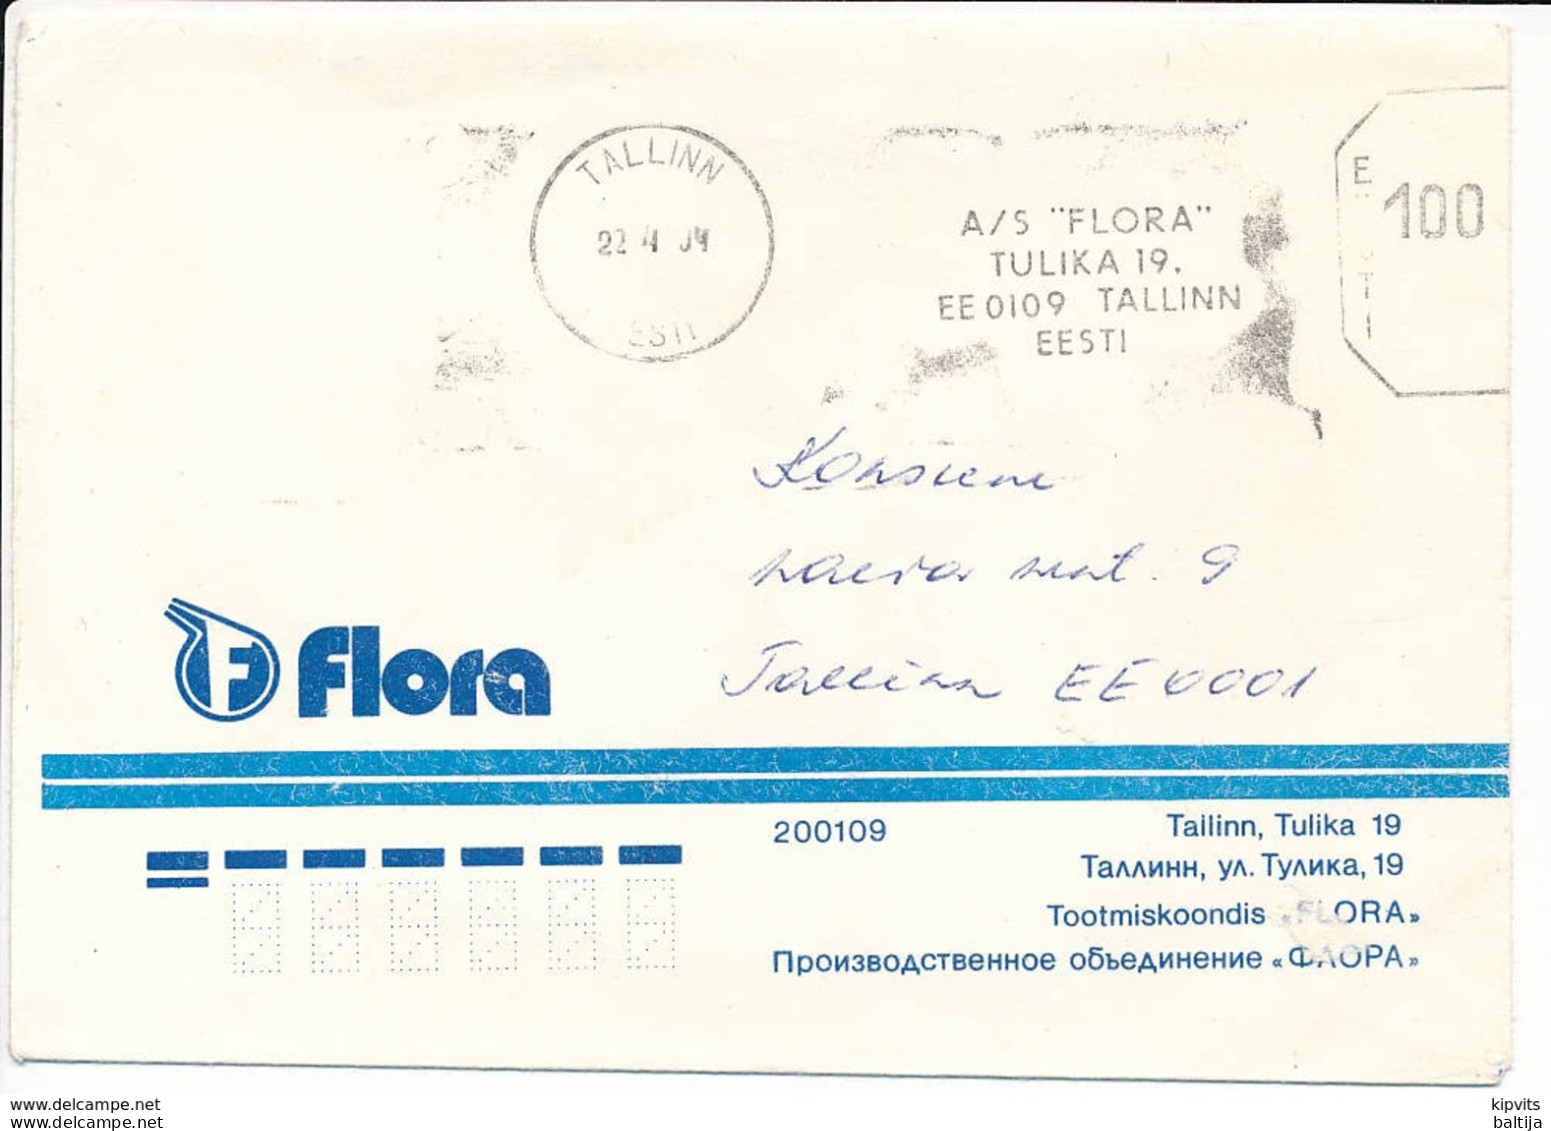 Meter Cover / Soviet Style - 22 April 1994 Tallinn - Estonia